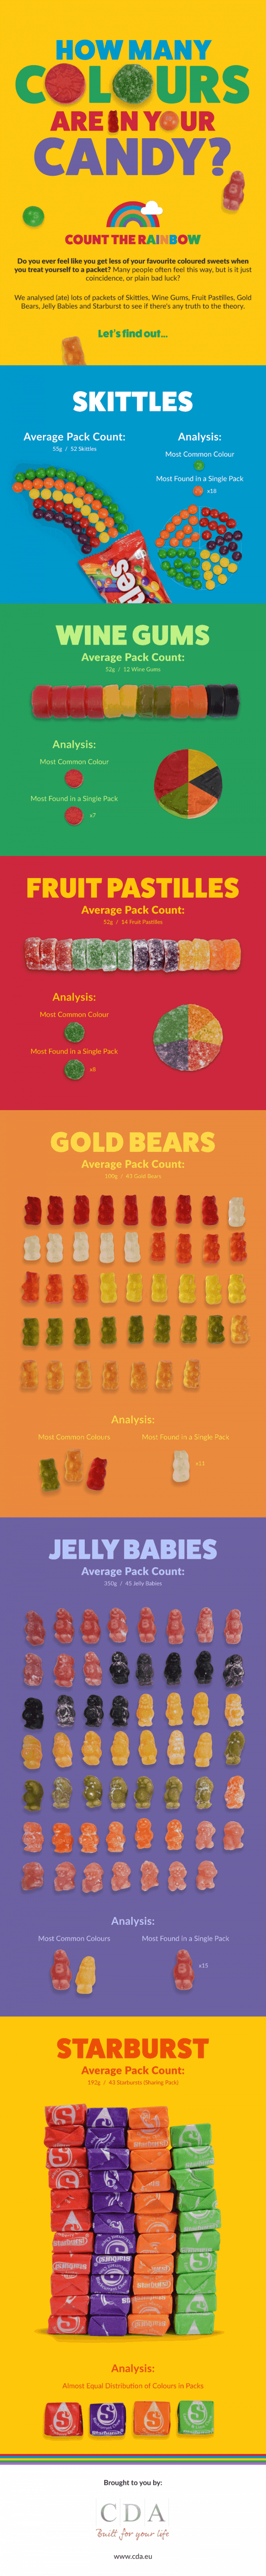 The Flavor Breakdown In An Average Pack of Skittles